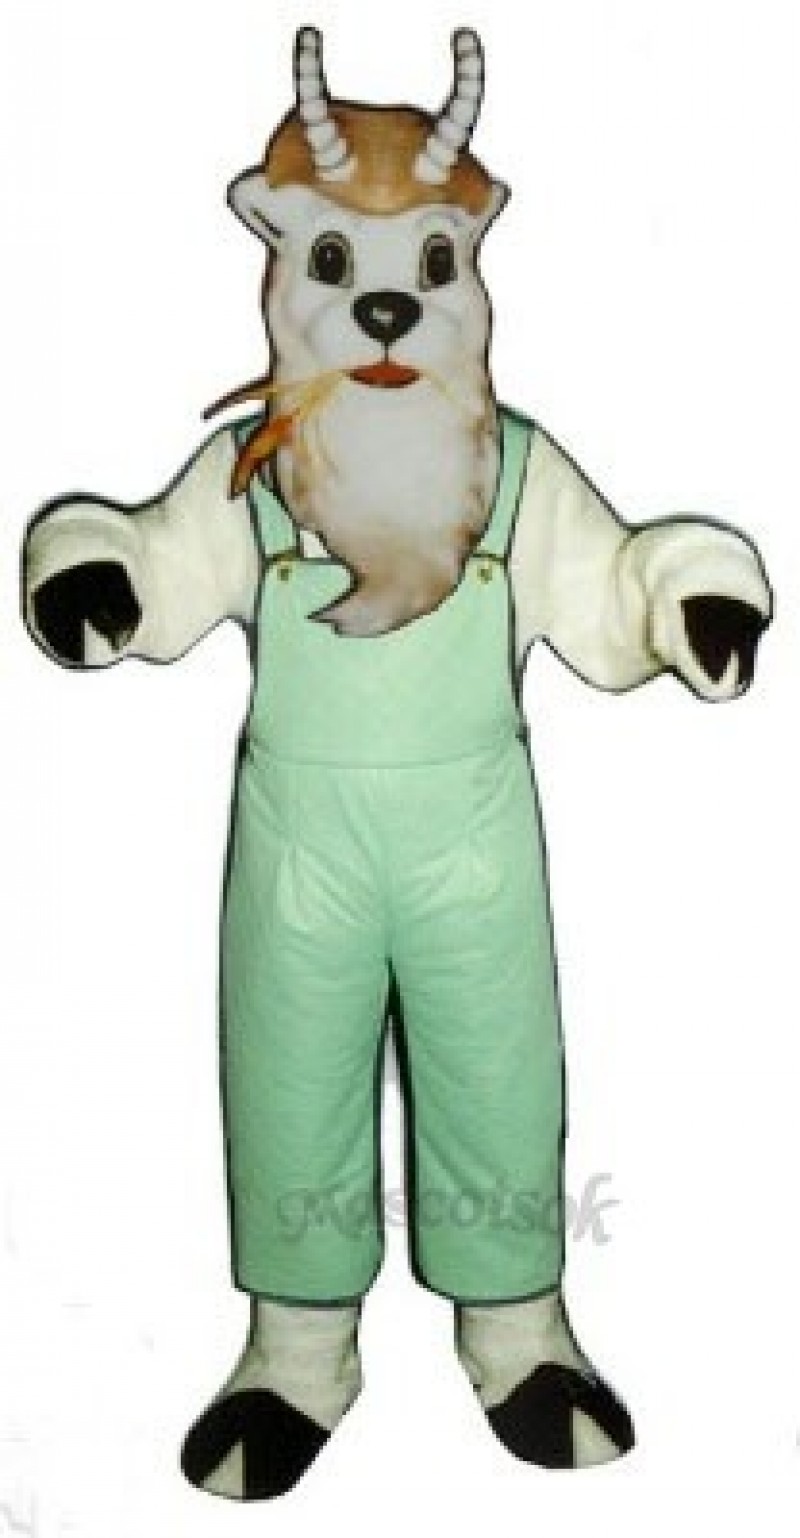 Hillbilly Goat Mascot Costume